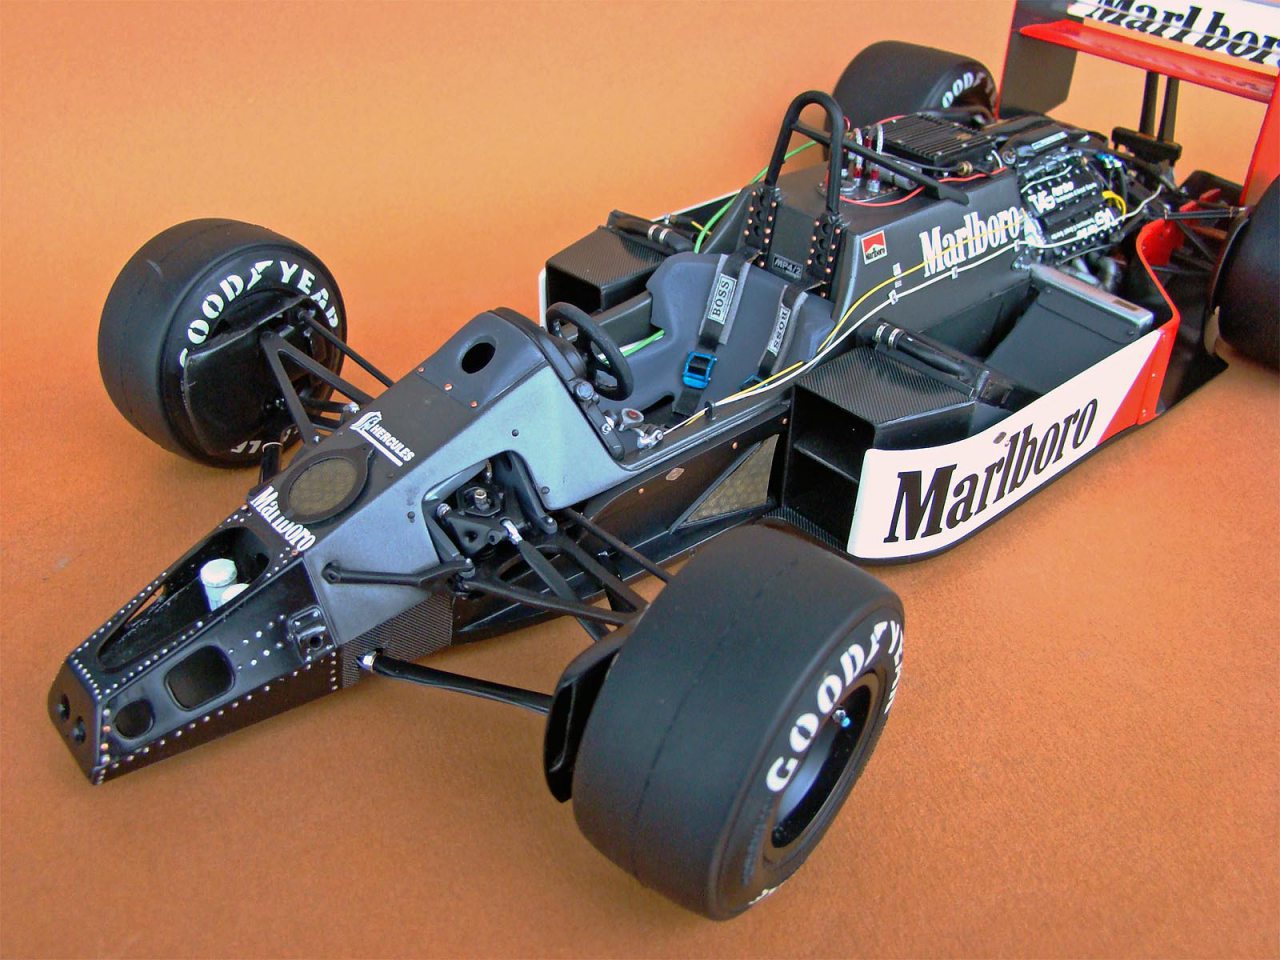 Front suspension of Brabham BT44B 1/12 (Tamiya). : r/Scalemodel